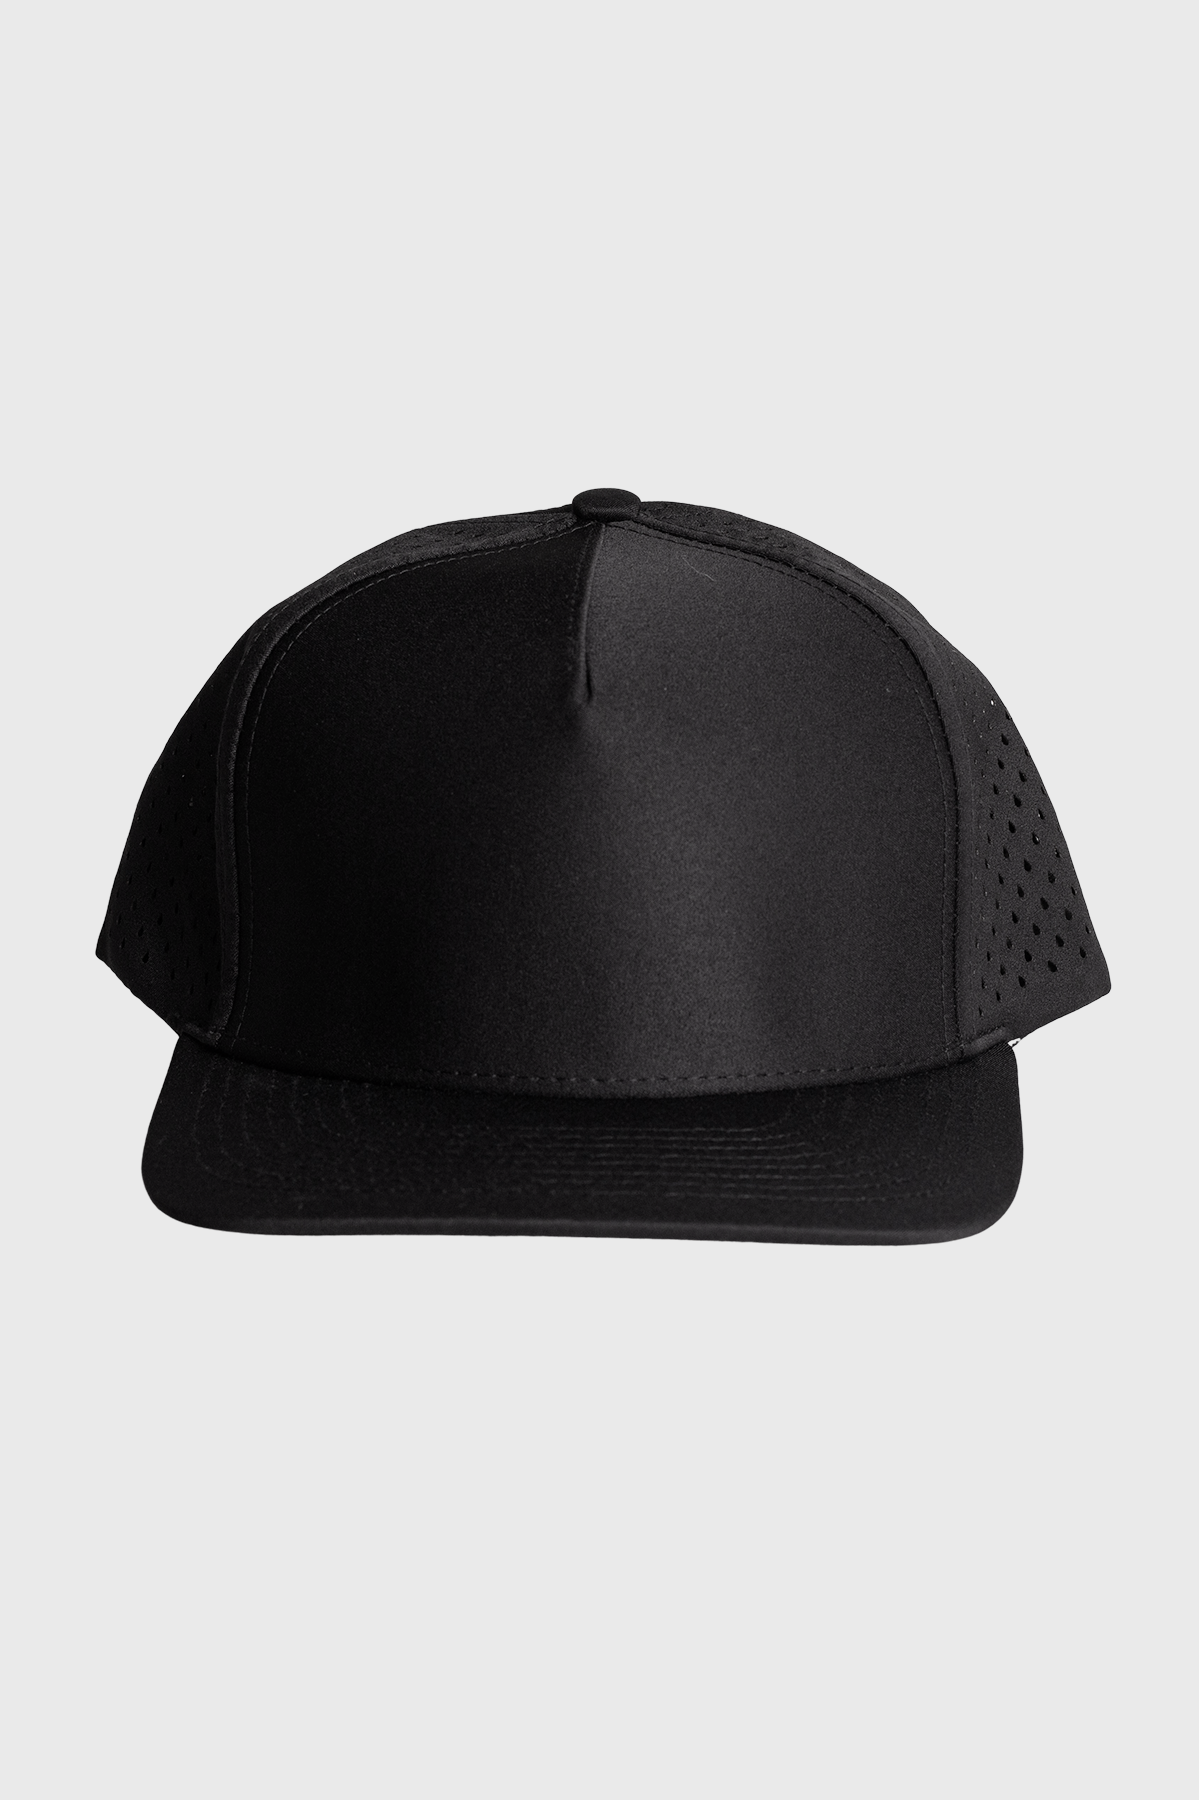 Custom Performance Peak Cap - Plain (Black)